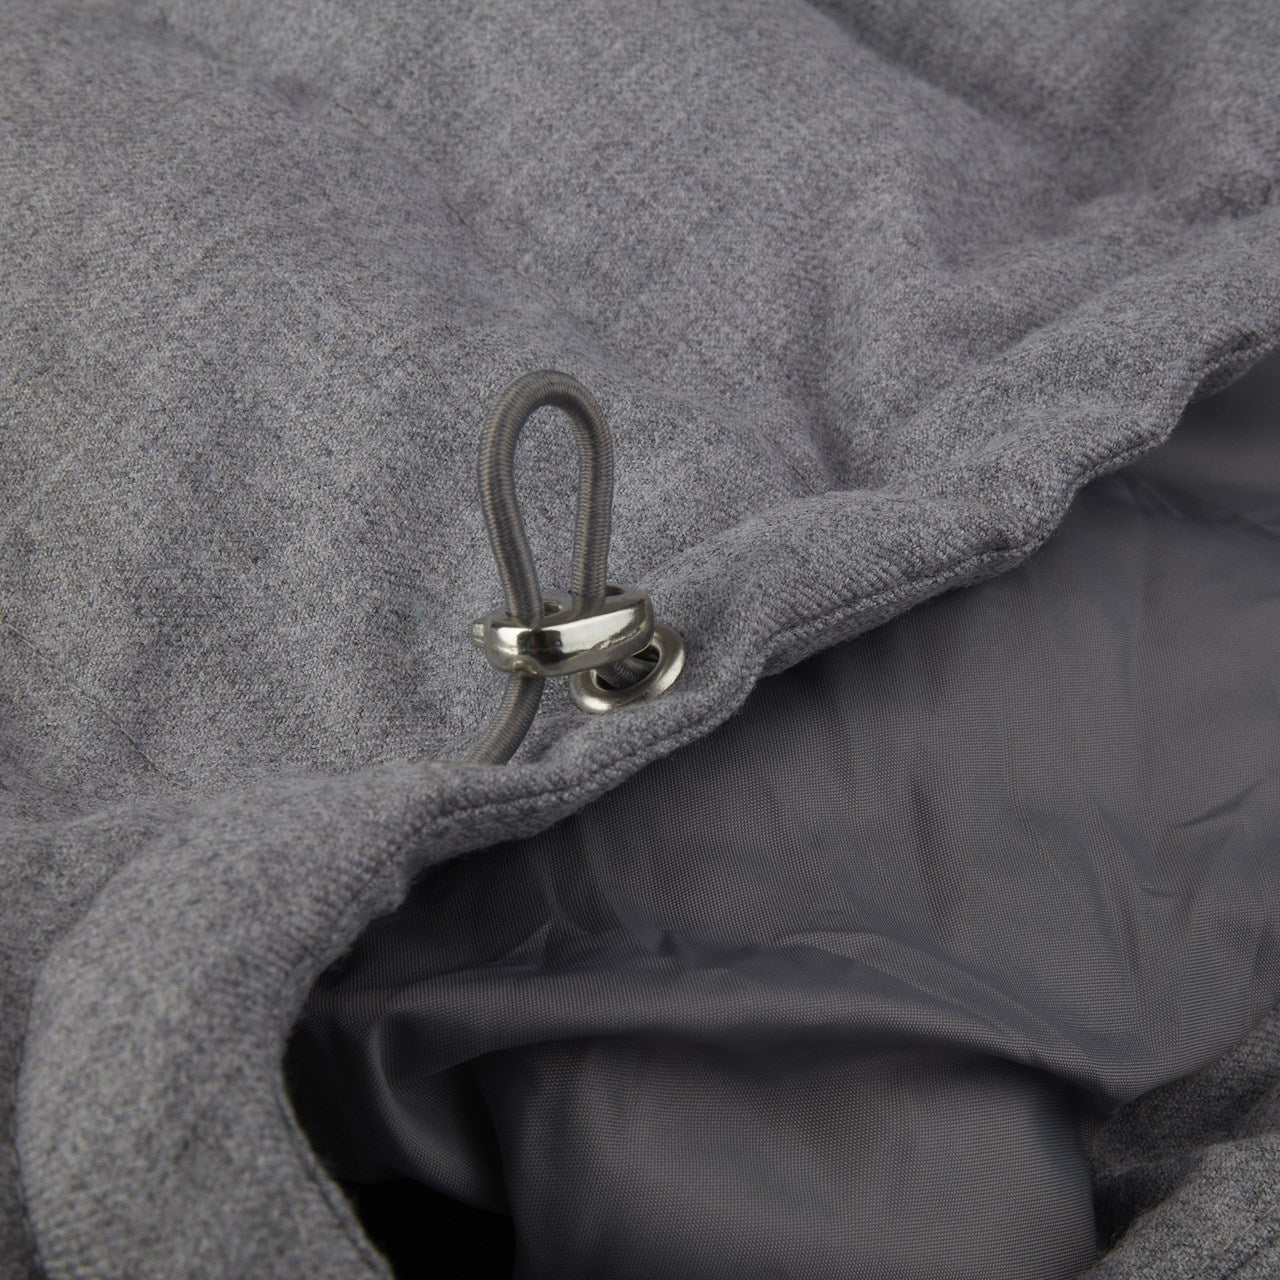 STENSTROMS - Grey Flannel Hooded Vest 4300251998320